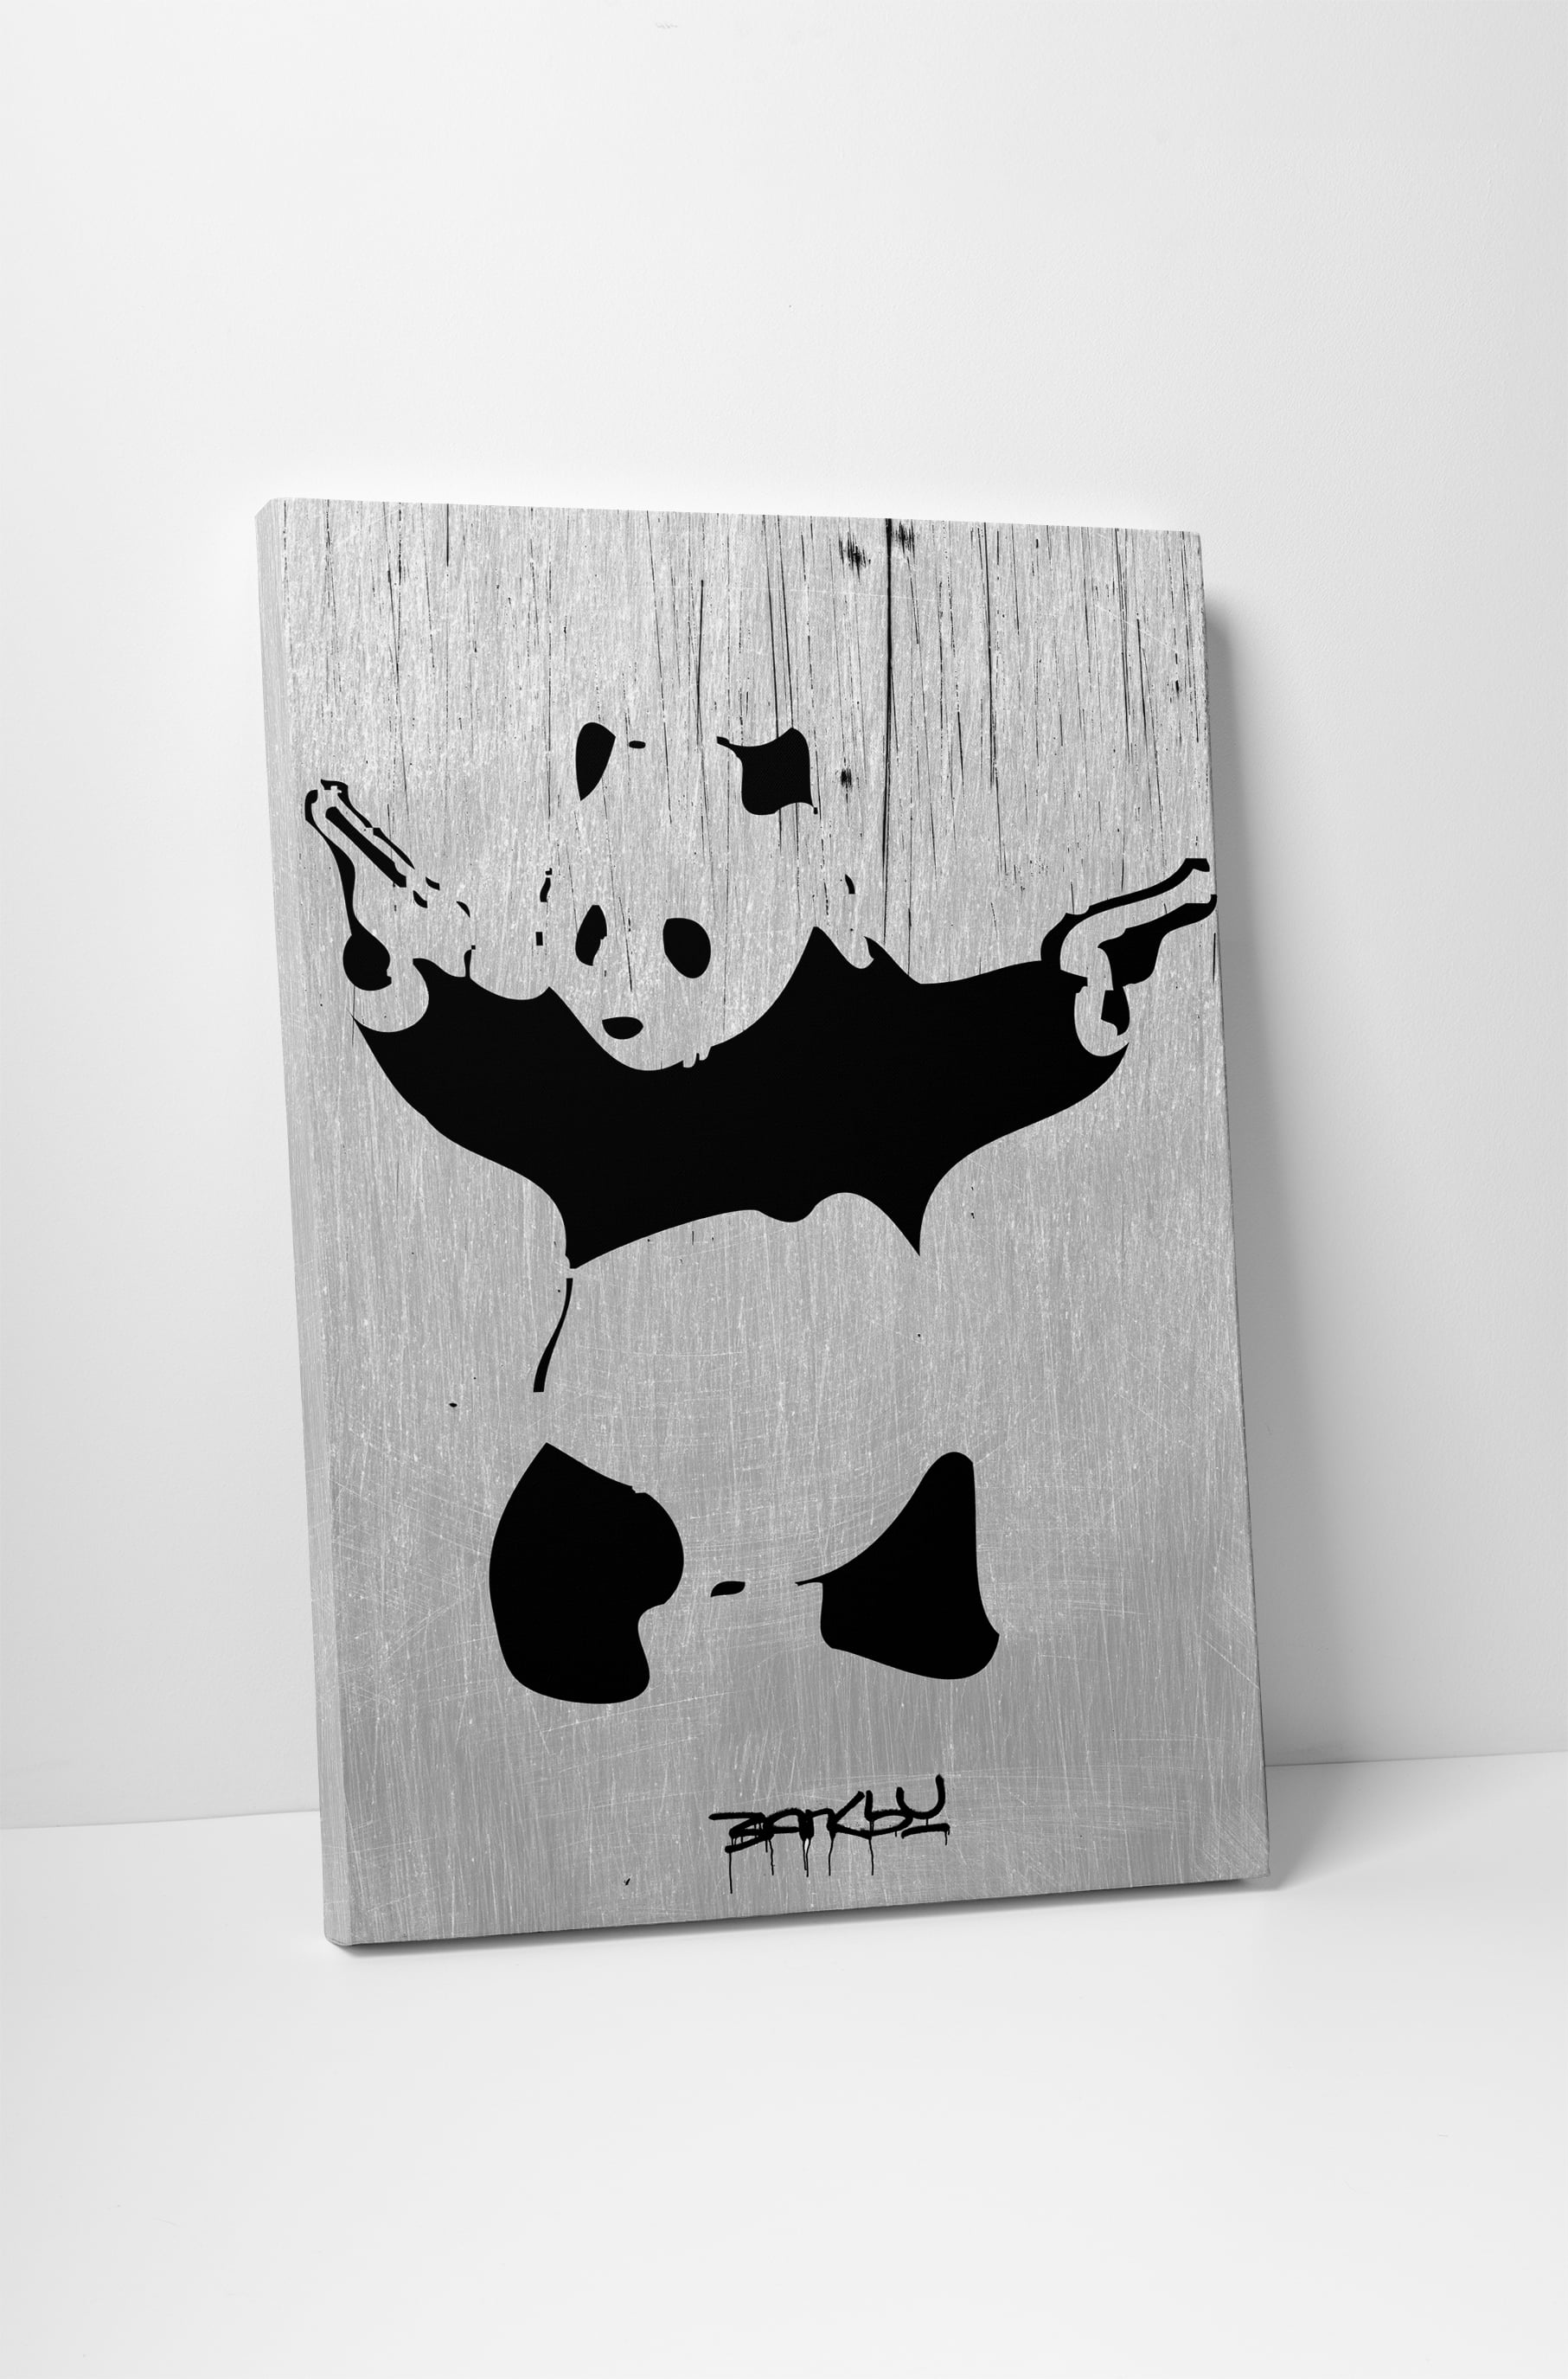 Guns Panda Banksy Single Canvas Wall Art Picture Print i 